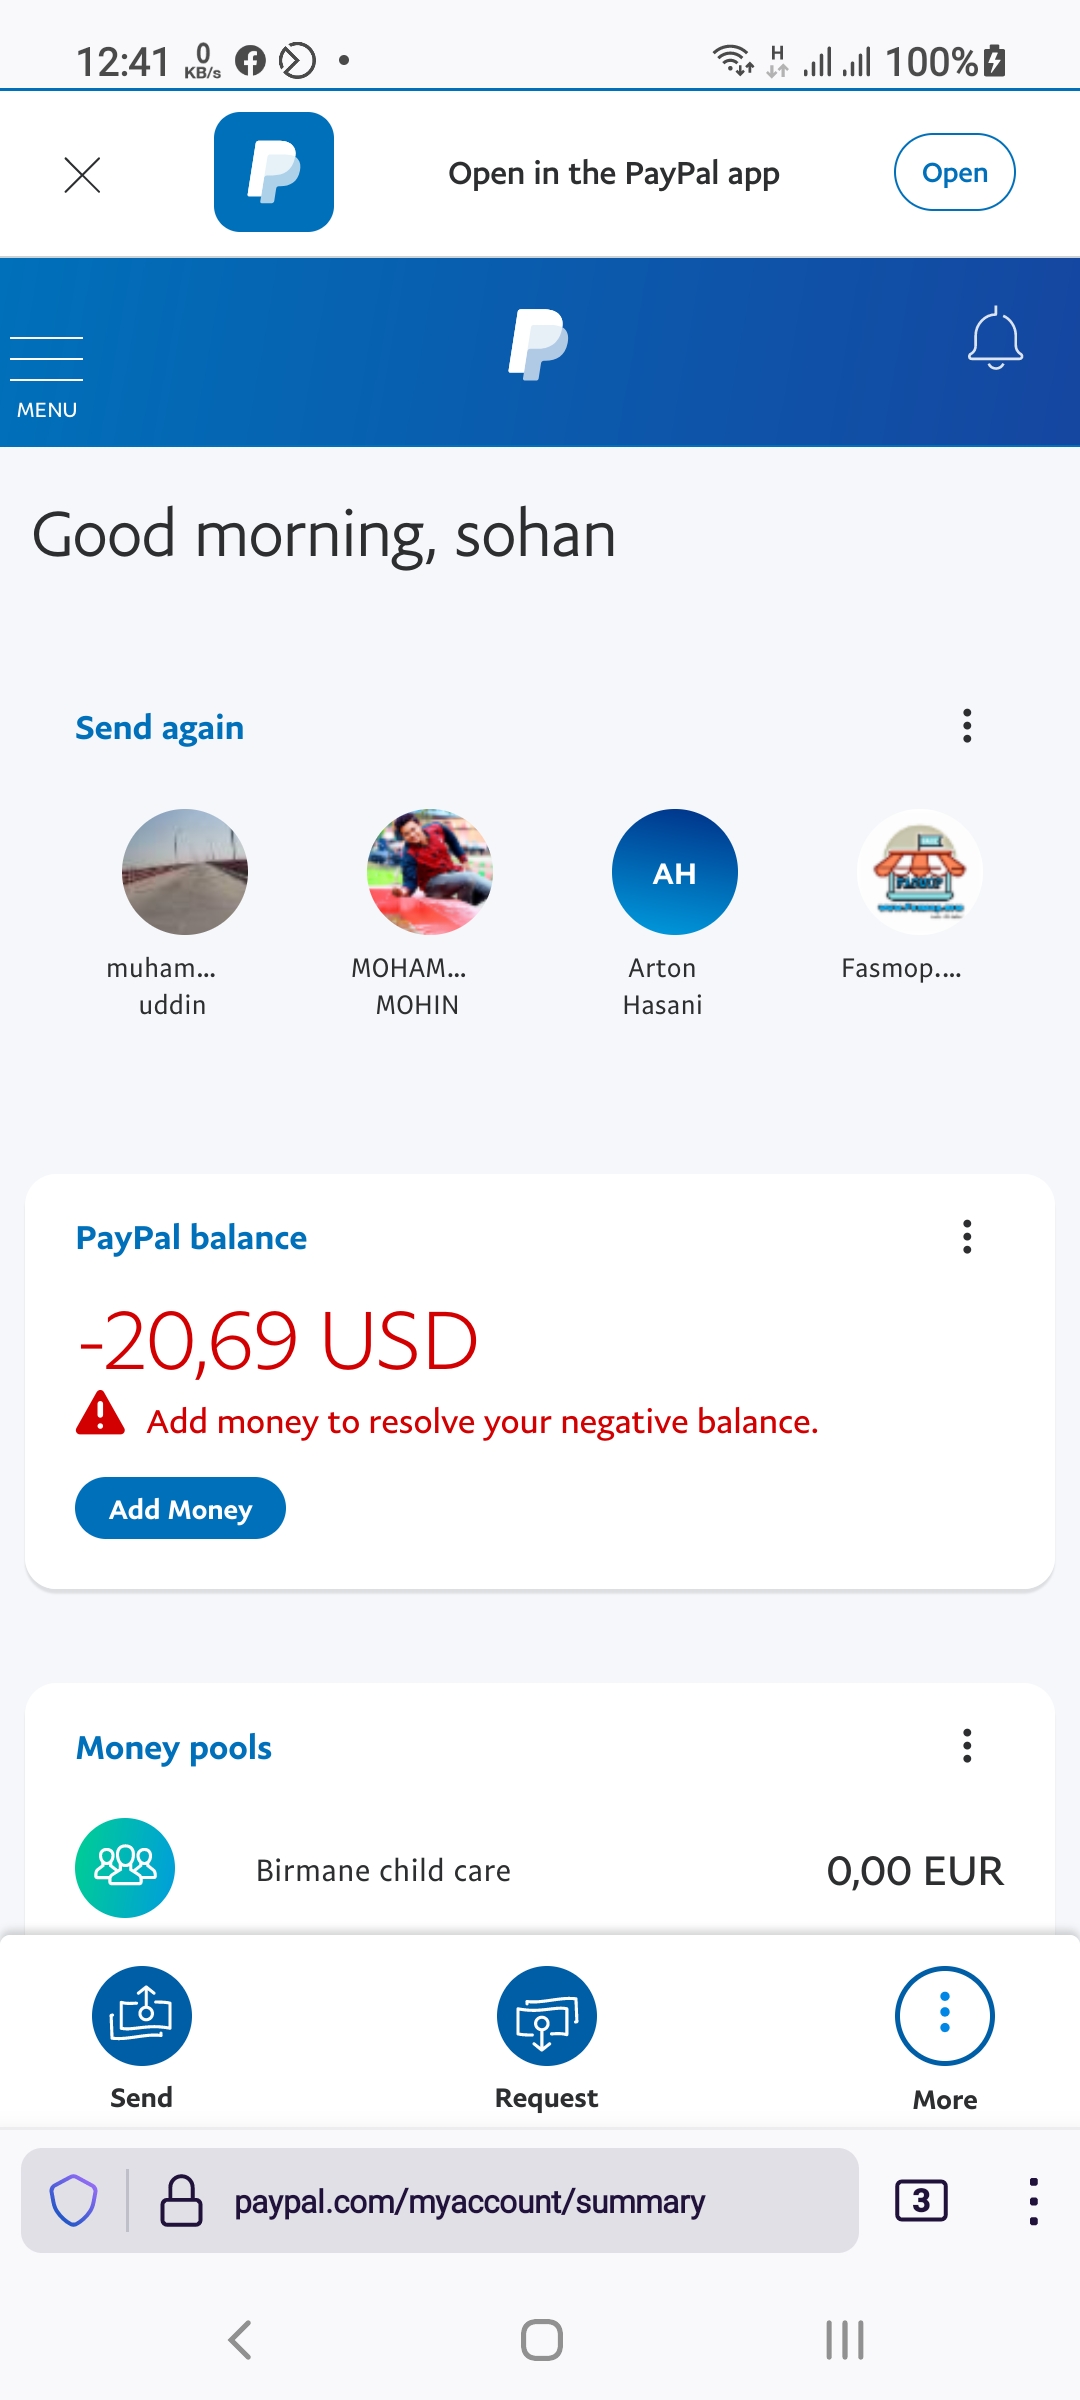 7494paypal send money 100$